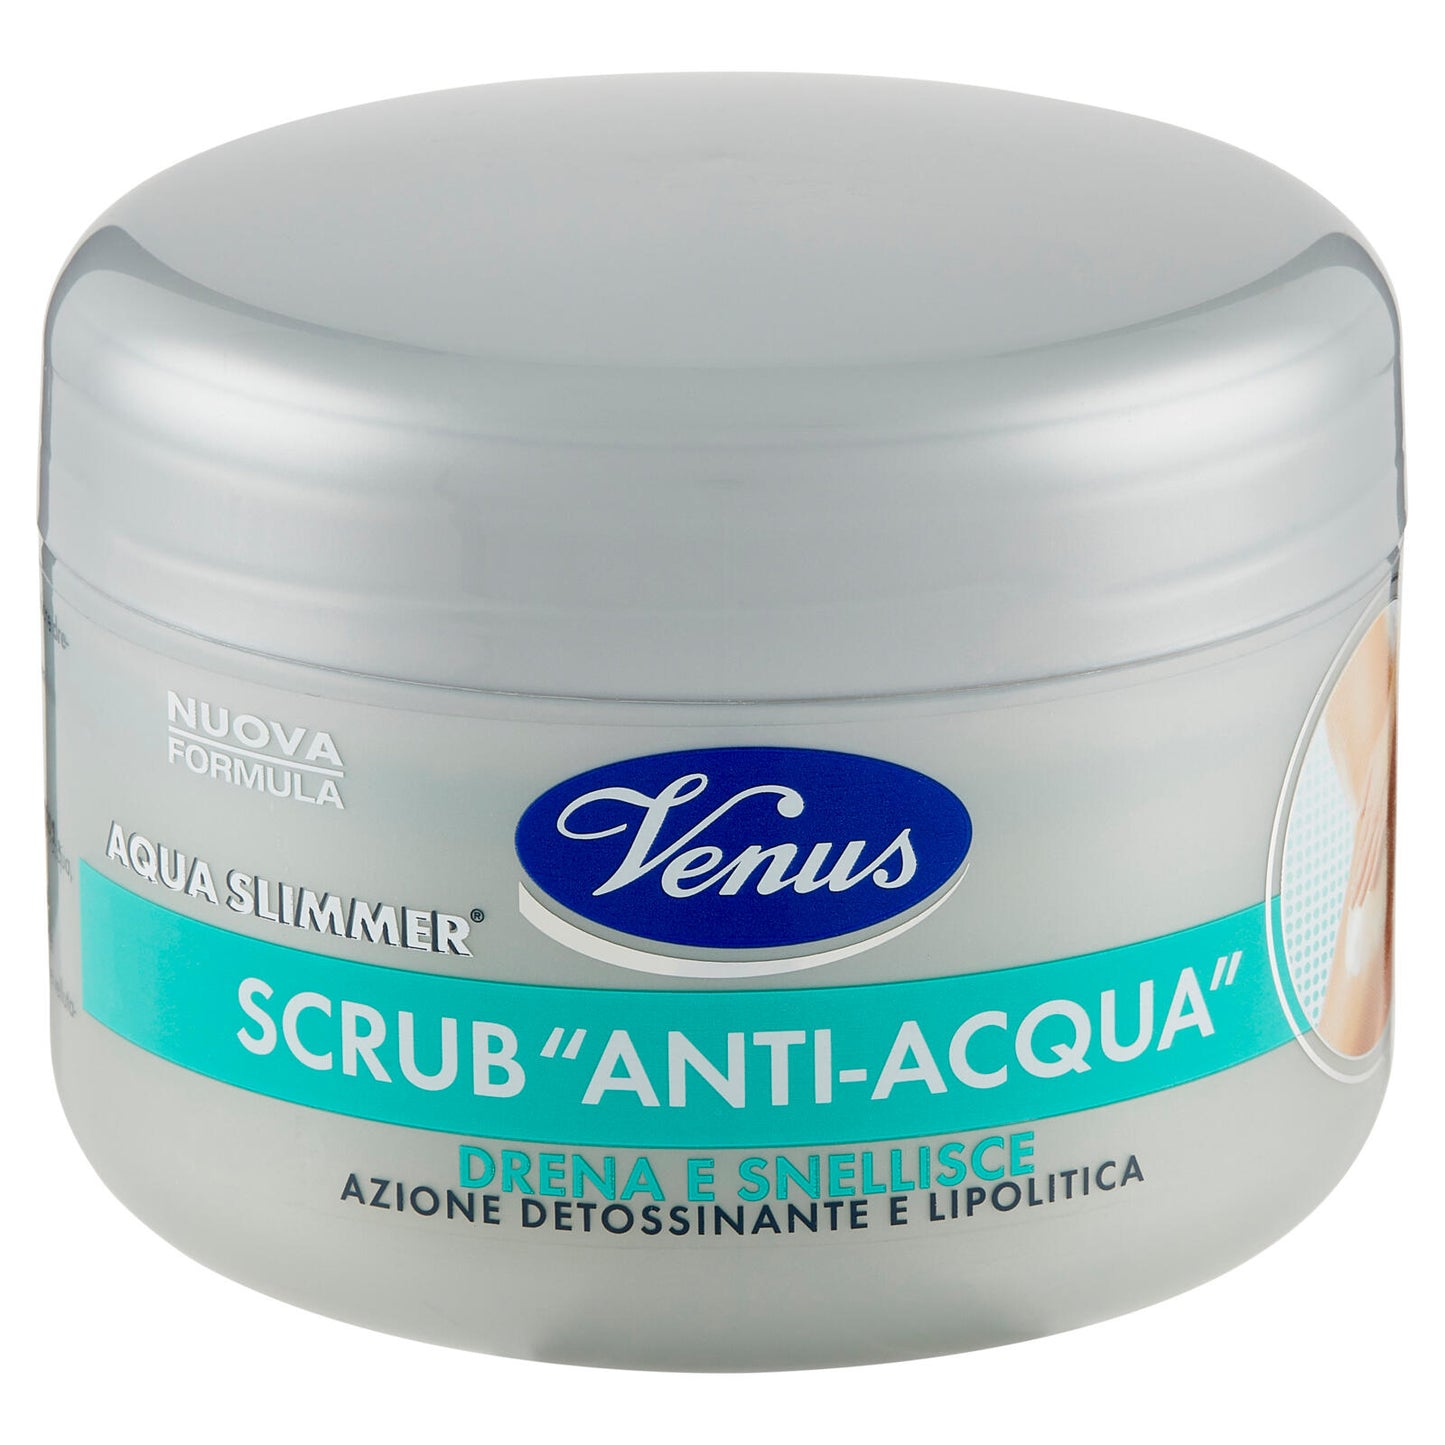 Venus Aqua Slimmer Scrub "Anti-Acqua" 550 g